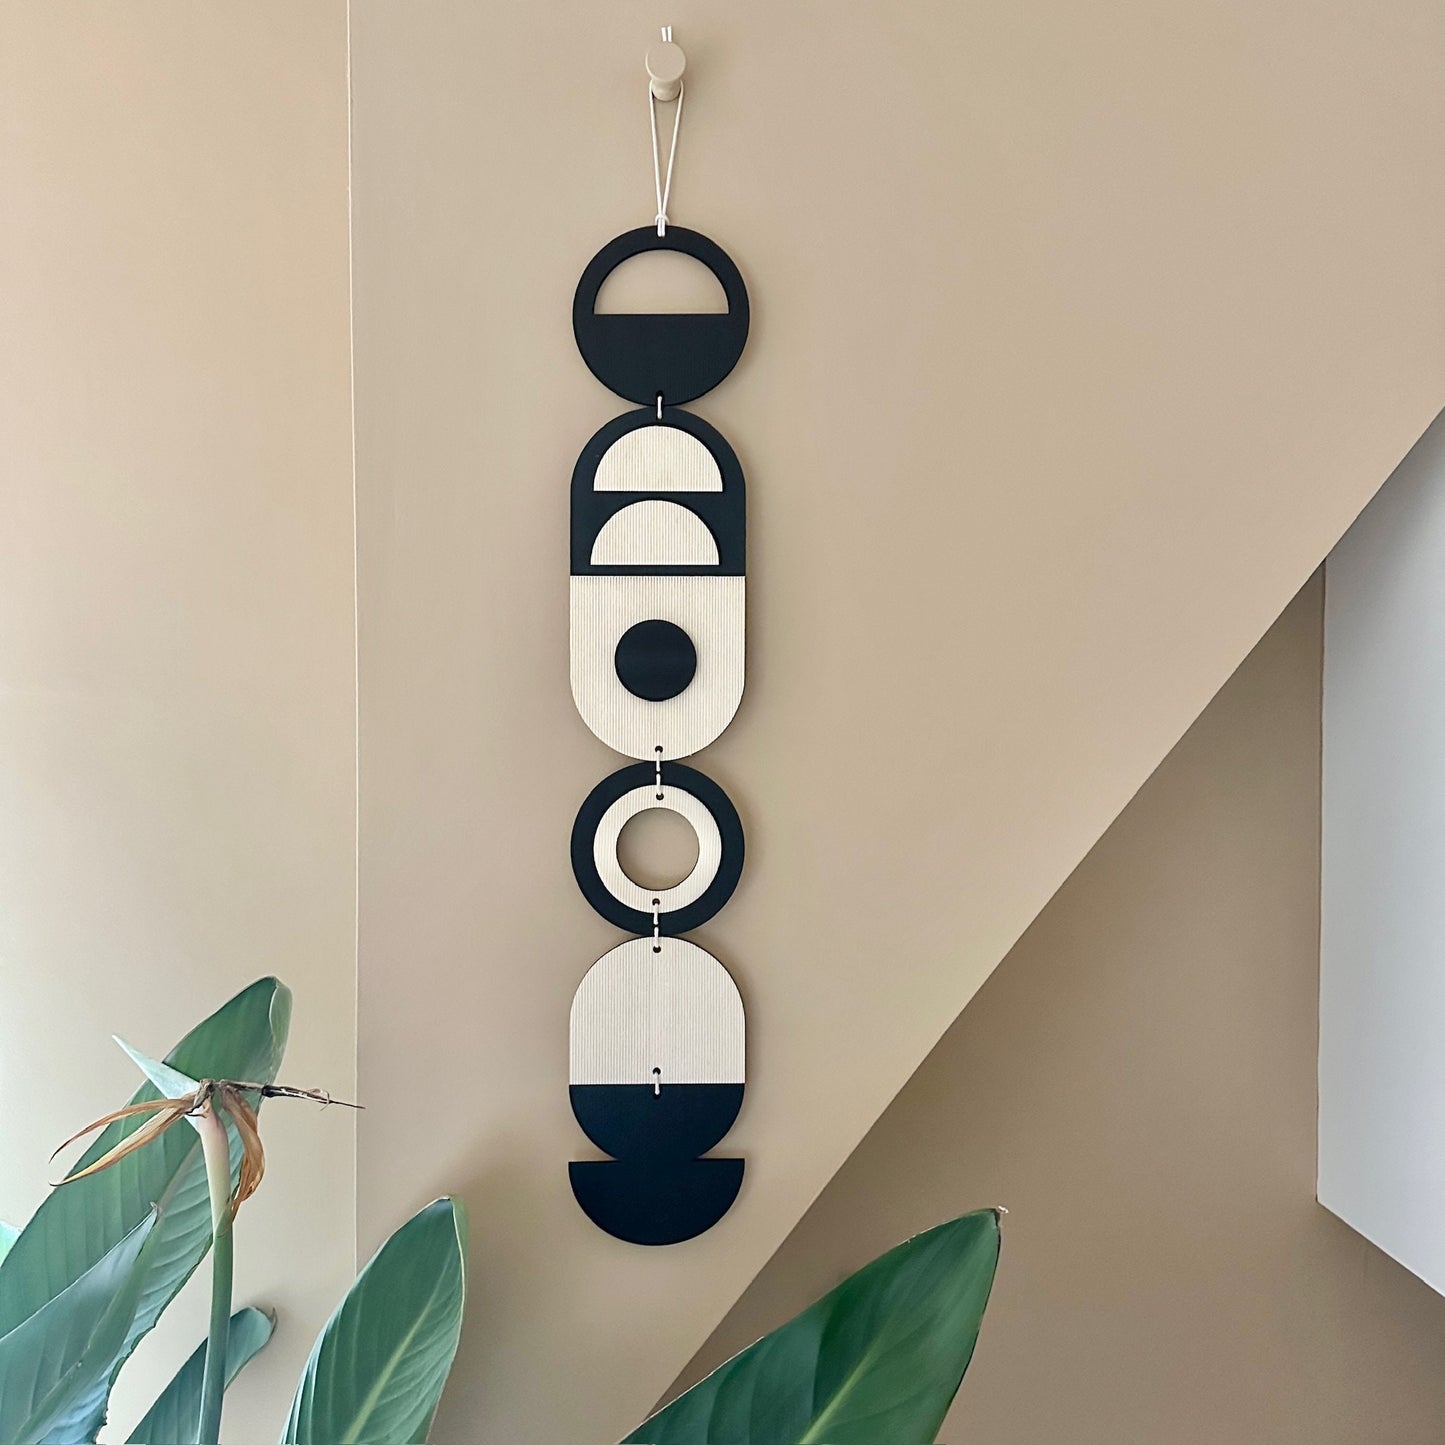 Black Wall Hanging Gift - Geometric Wall Art - New Home Gift - Housewarming Present - Mid-Century Home Decor - Art Gifting